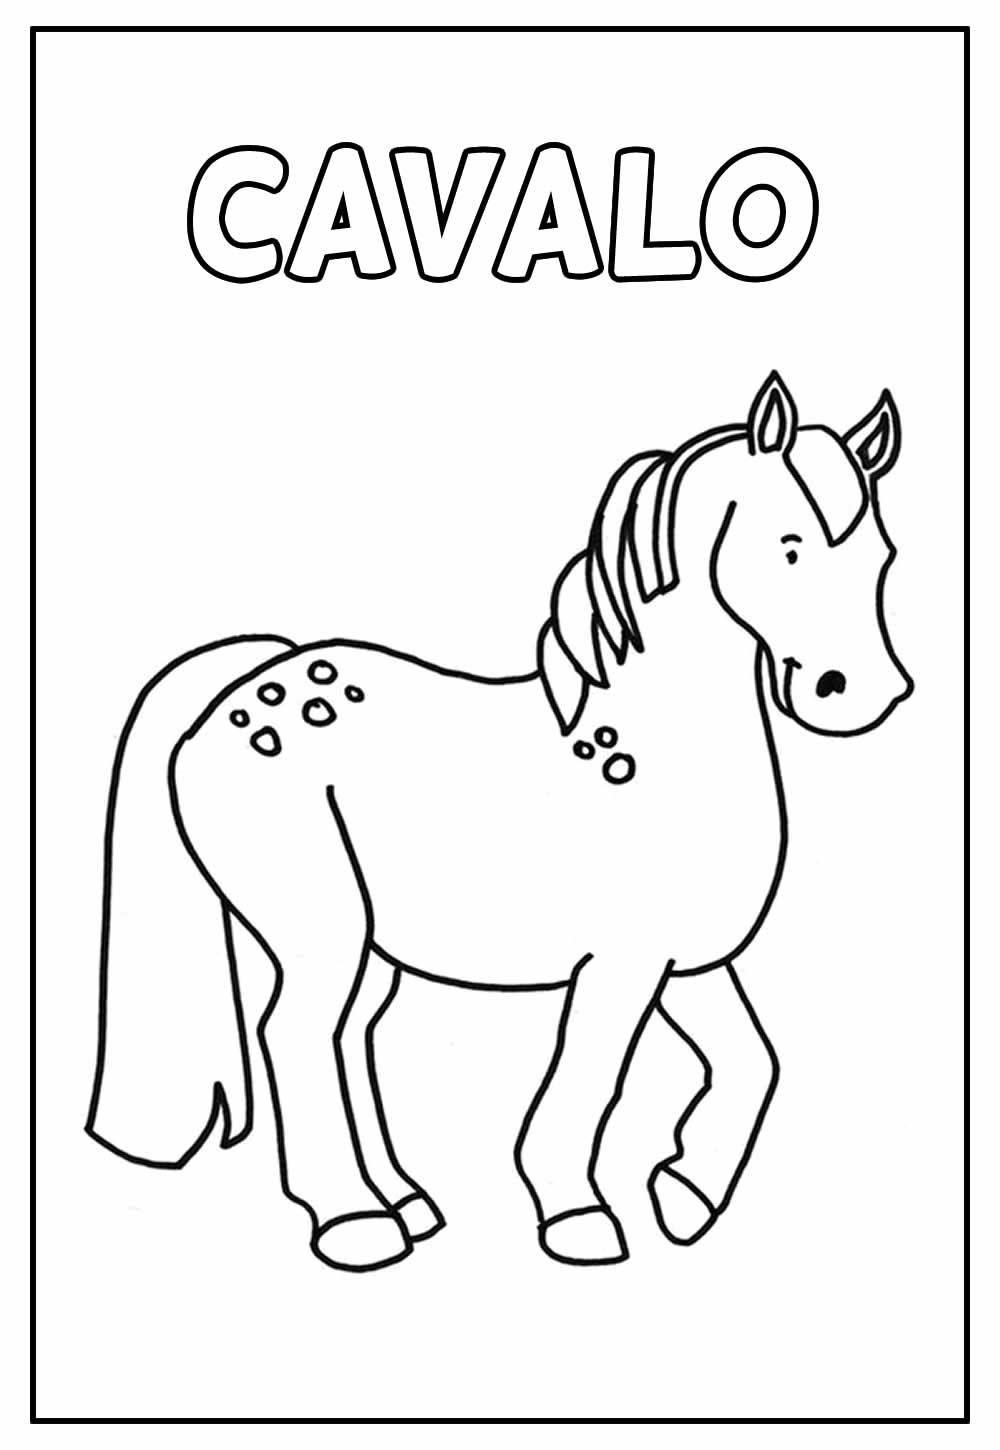 Desenho Educativo de Cavalo para colorir